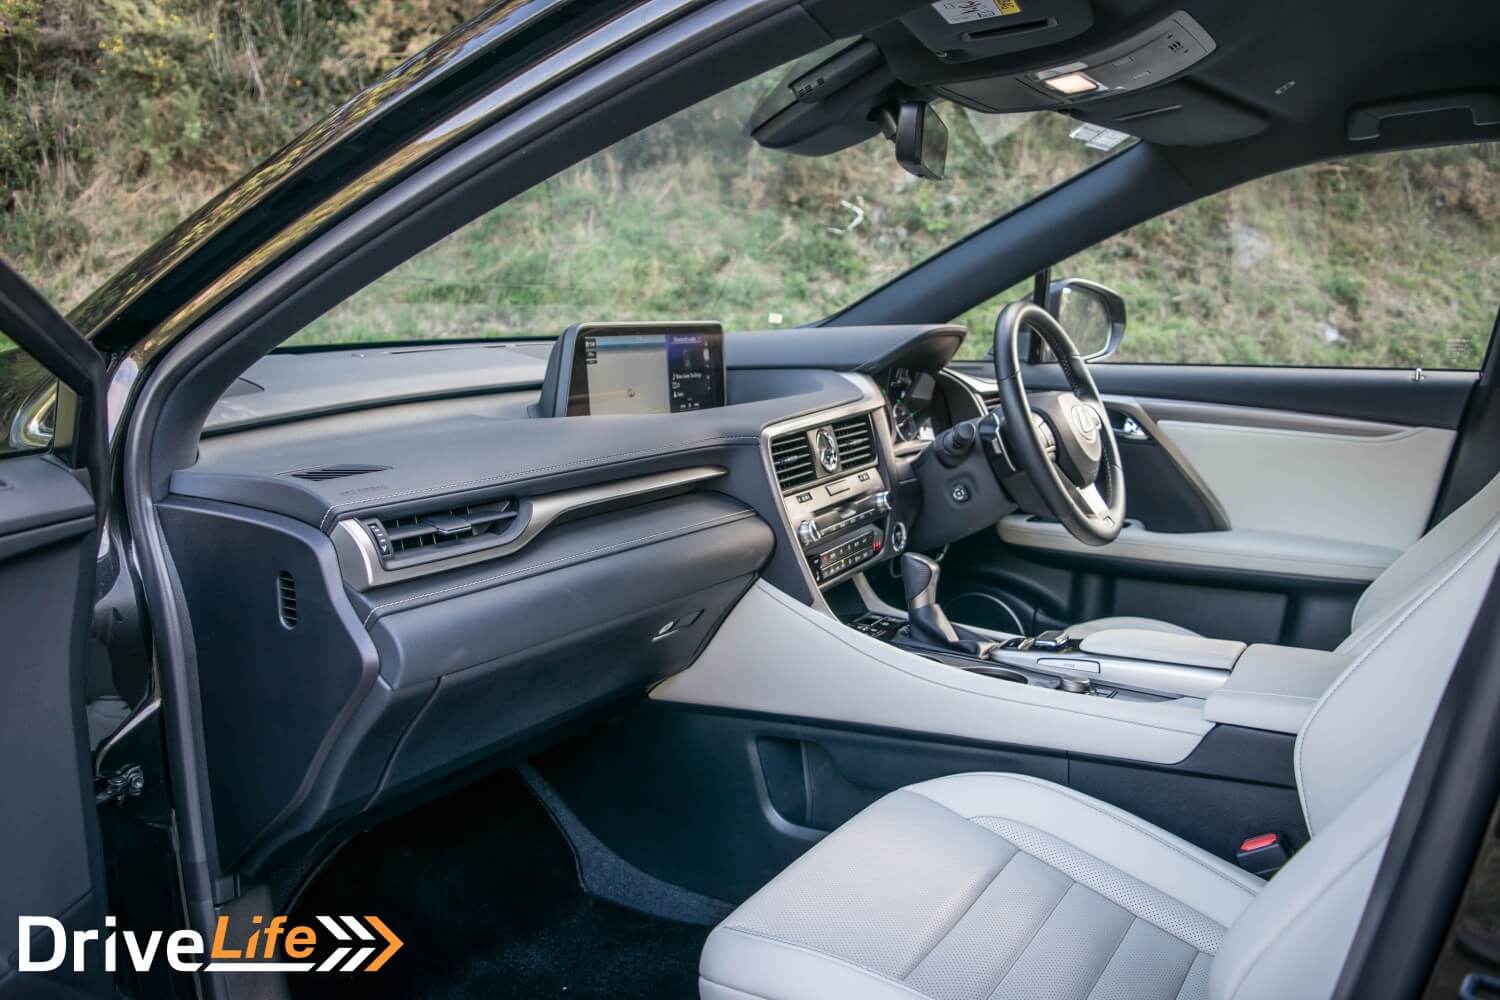 Drive-Life-NZ-Car-Review-Lexus-RX450h-F-Sport-2016-17